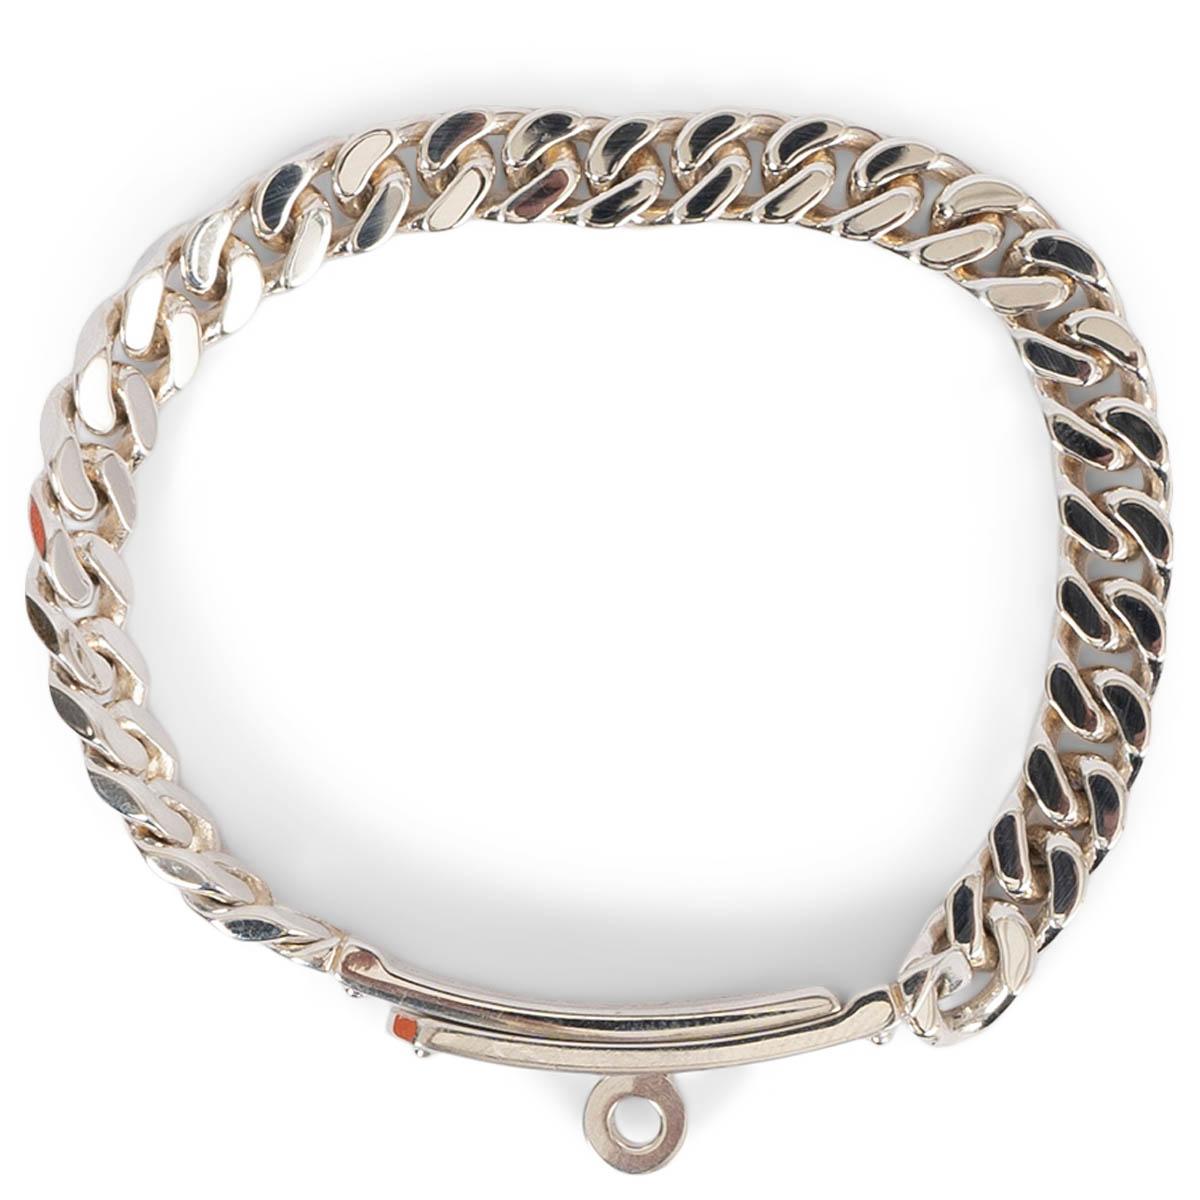 Women's HERMES sterling silver KELLY GOURMETTE Chain Bracelet TPM For Sale